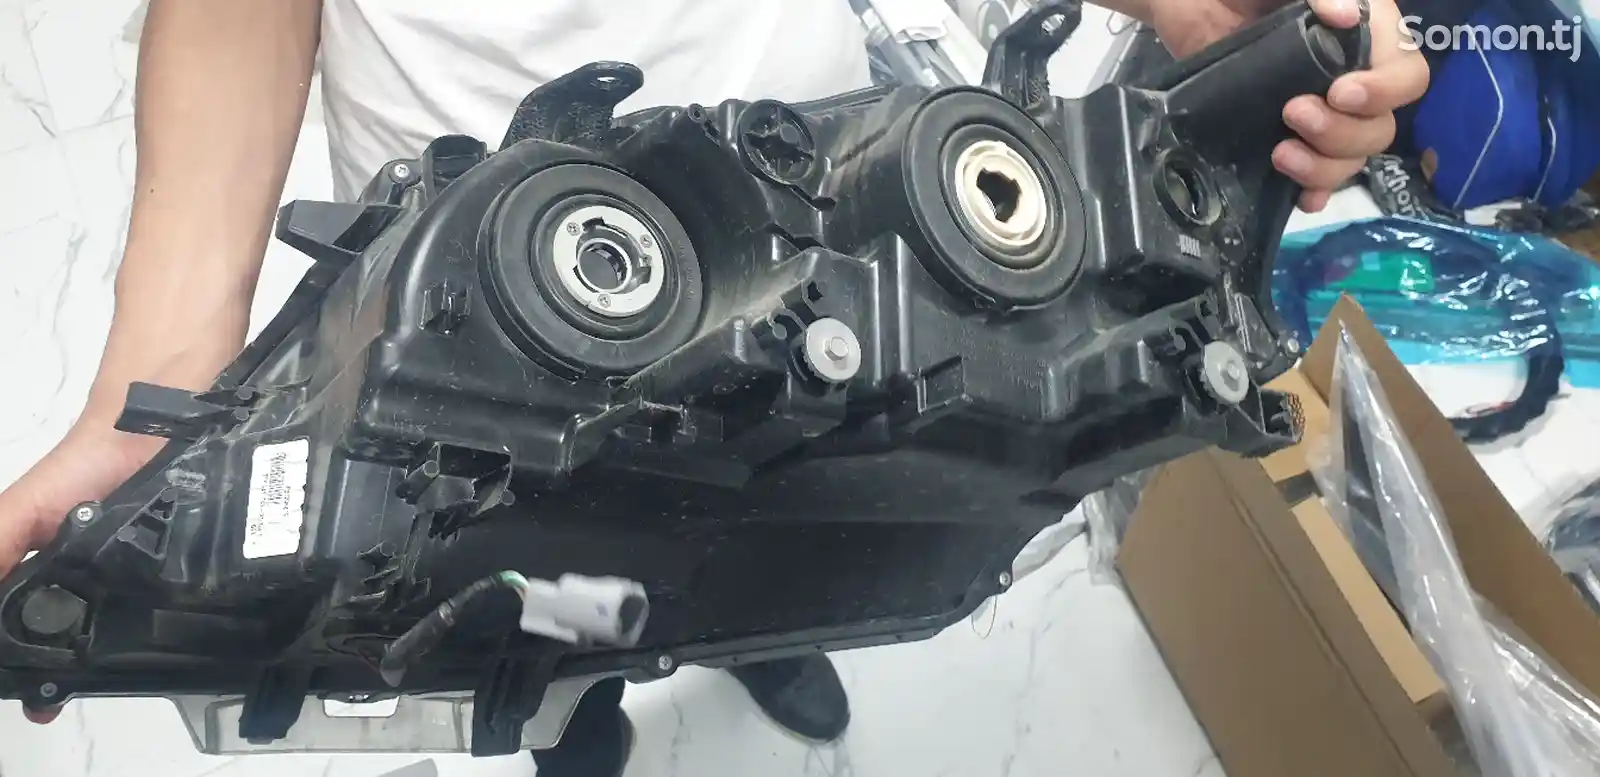 Передний правый фар на Lexus RX2013-2015 заводское-6